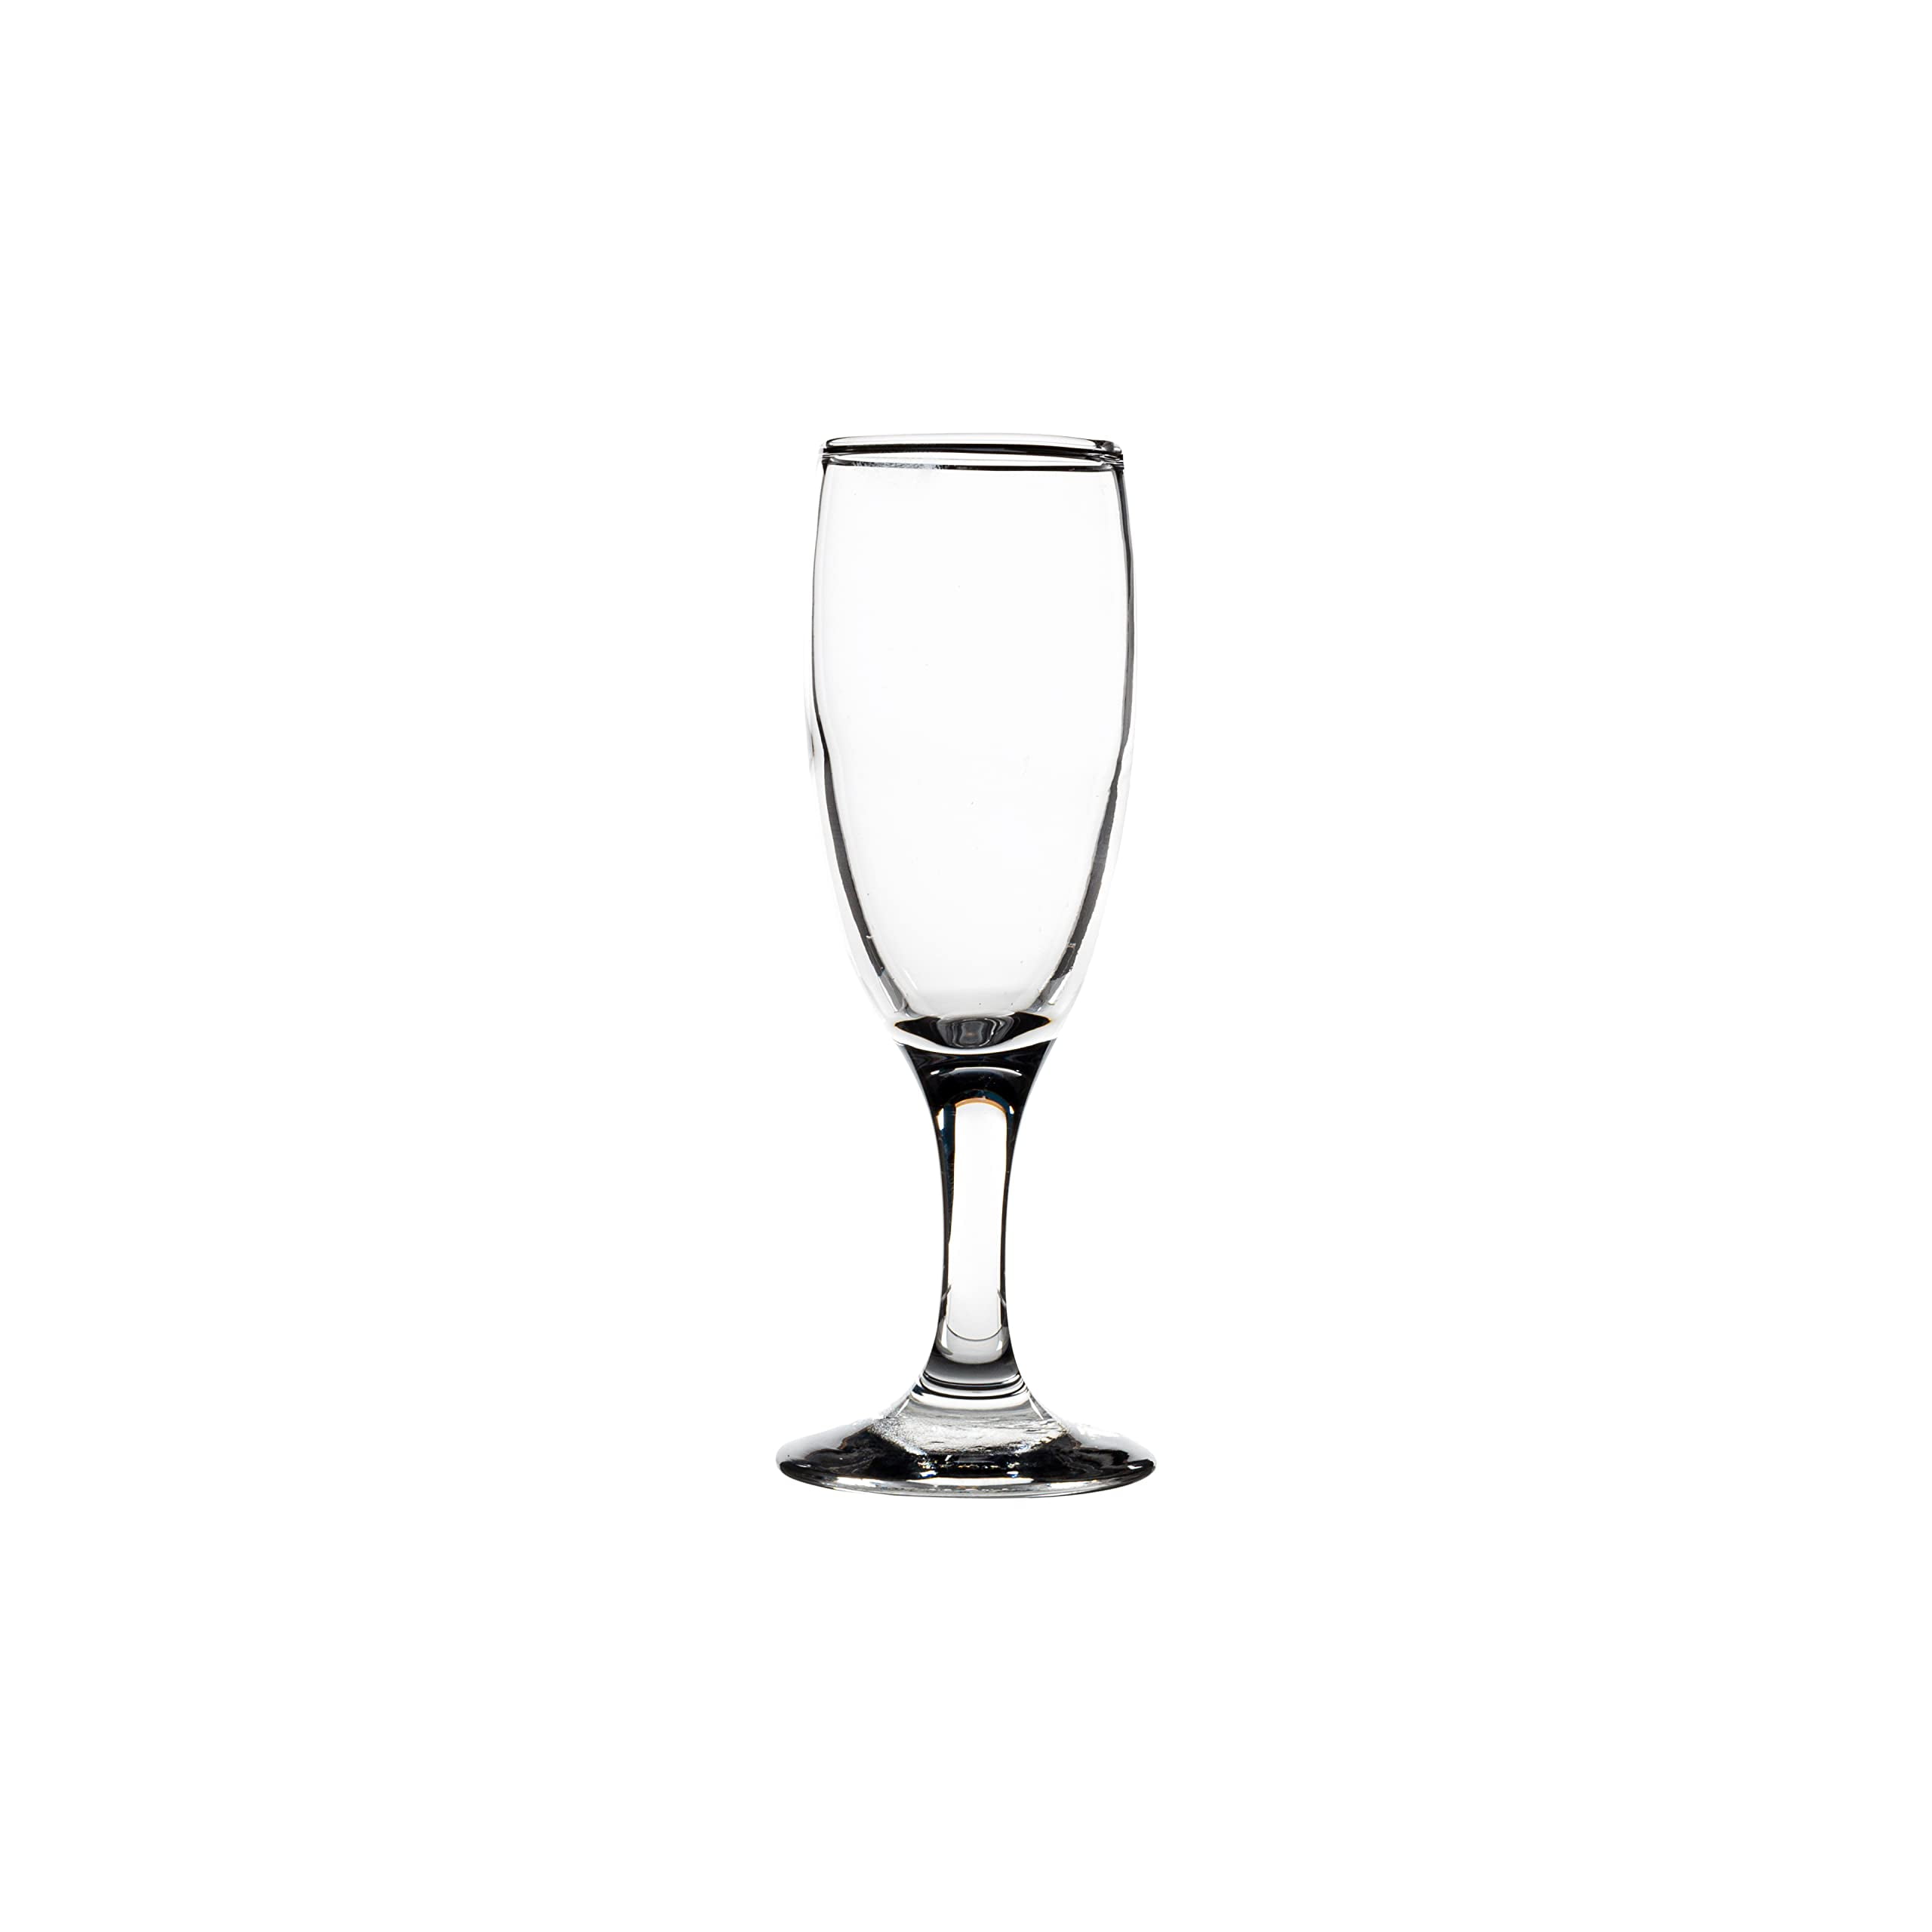 Pack of 4 Glass Champagne Flutes 15 cl Laisa - SKLUM